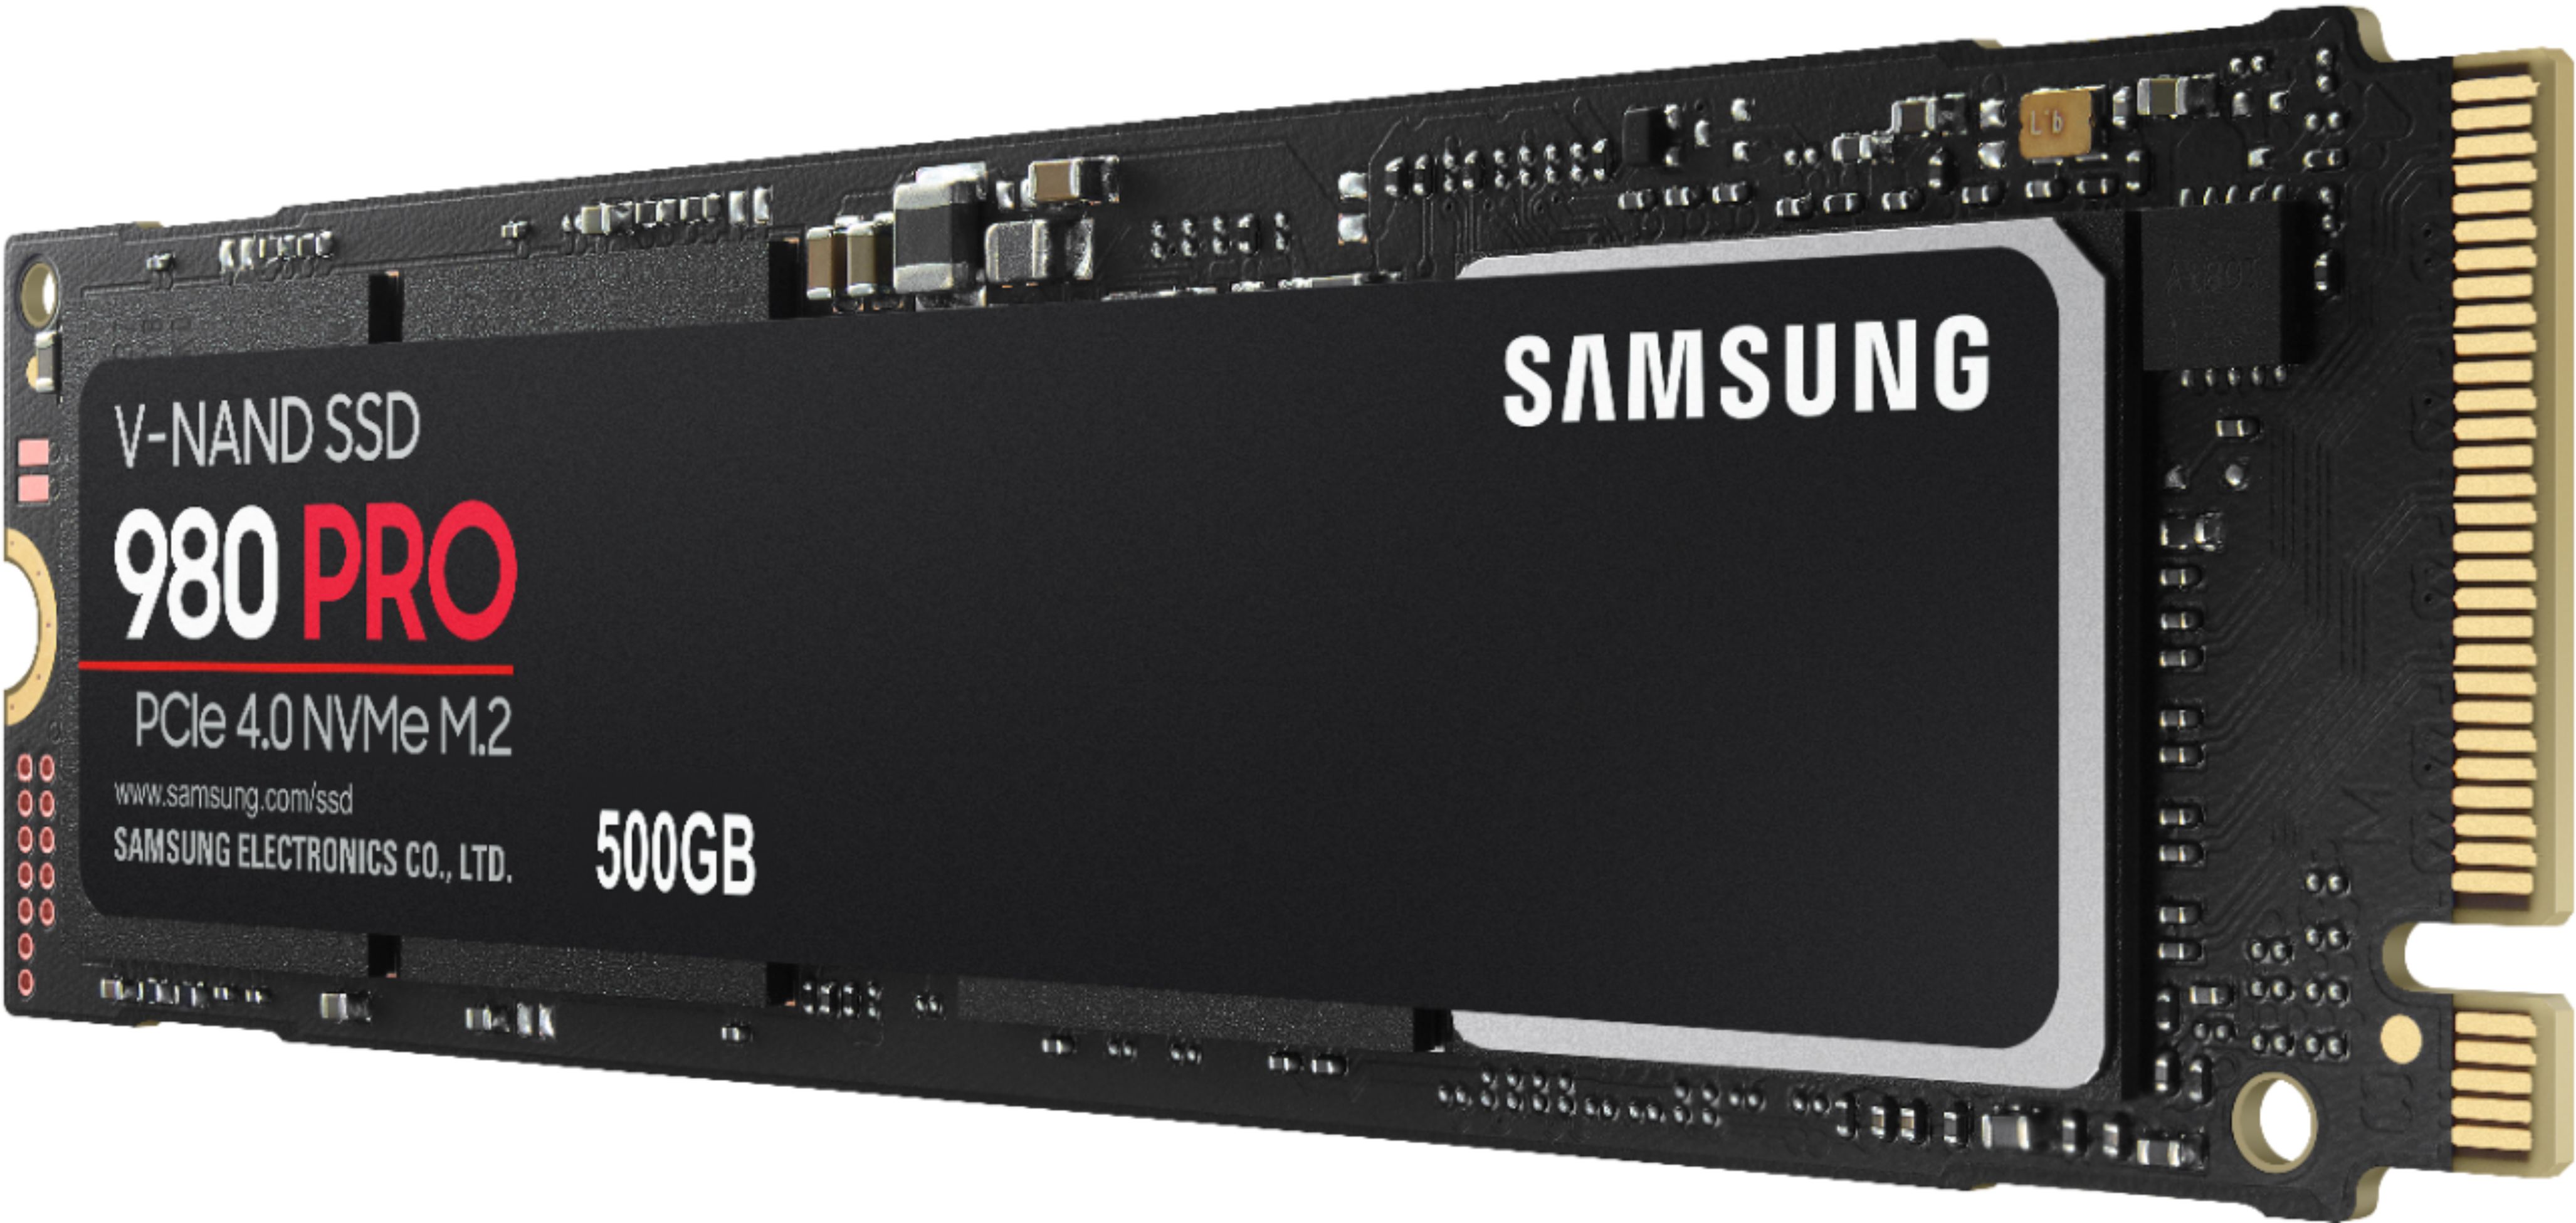 Samsung 980 PRO 500GB Internal Gaming SSD PCIe  - Best Buy